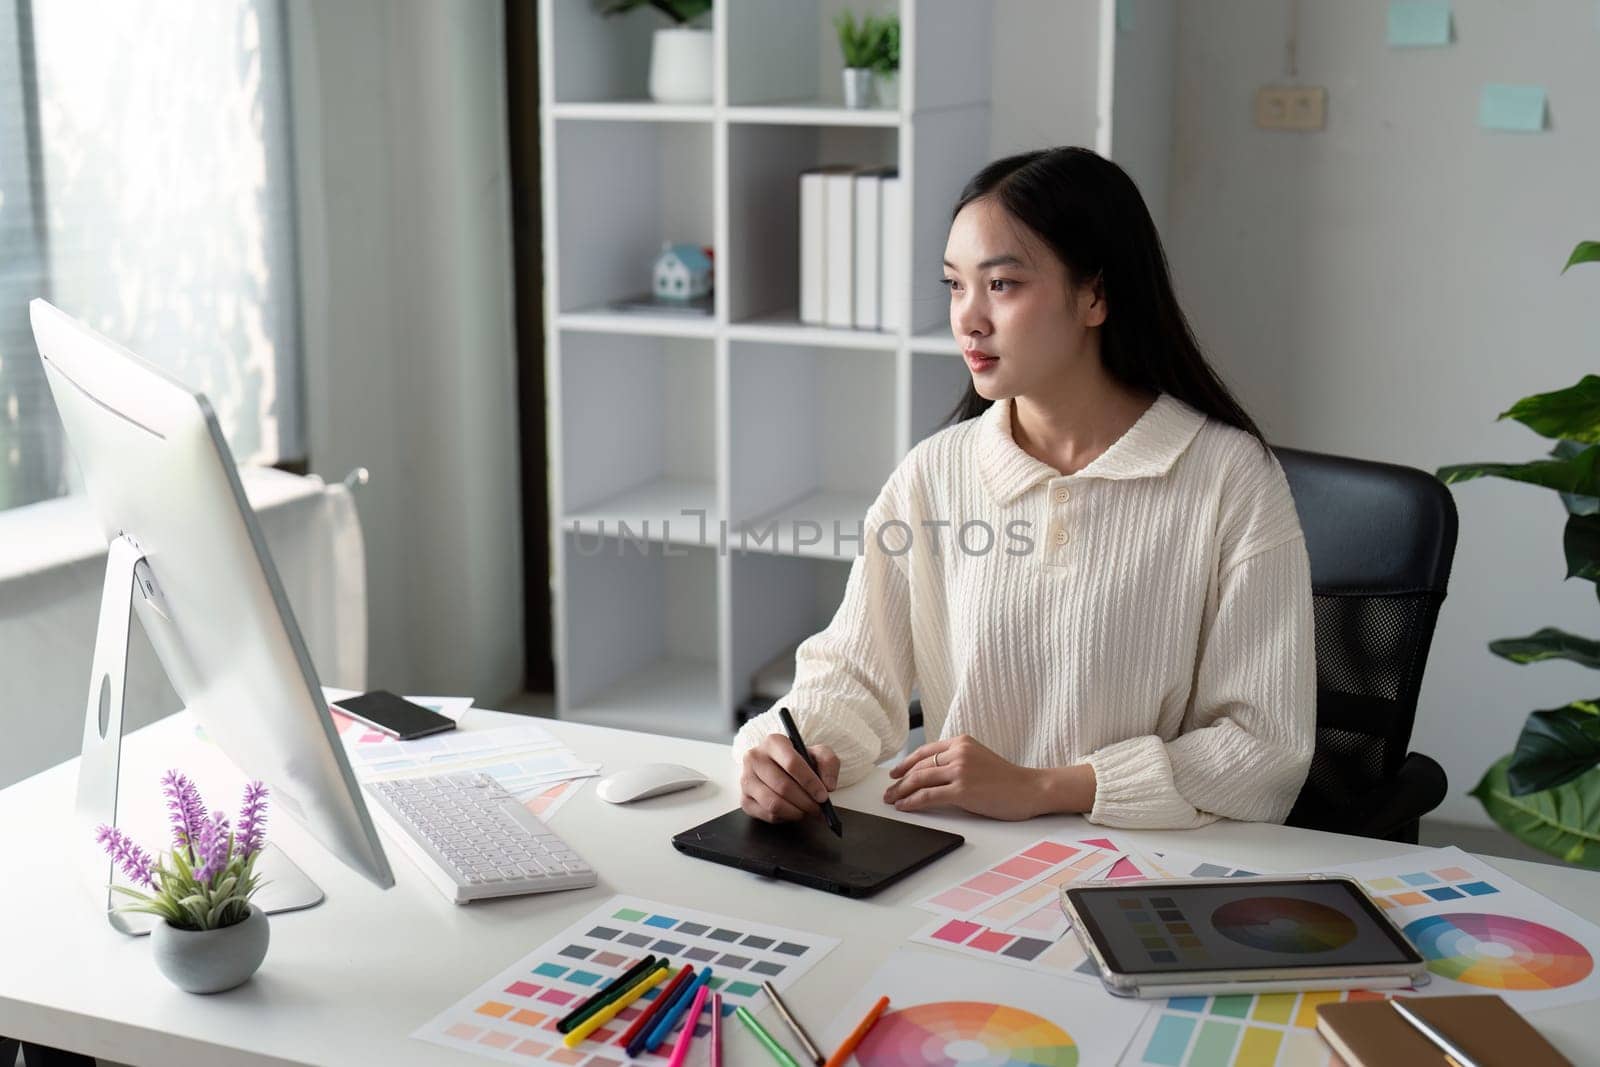 Asian woman graphic designer working in home office. Artist creative designer illustrator graphic skill concept.